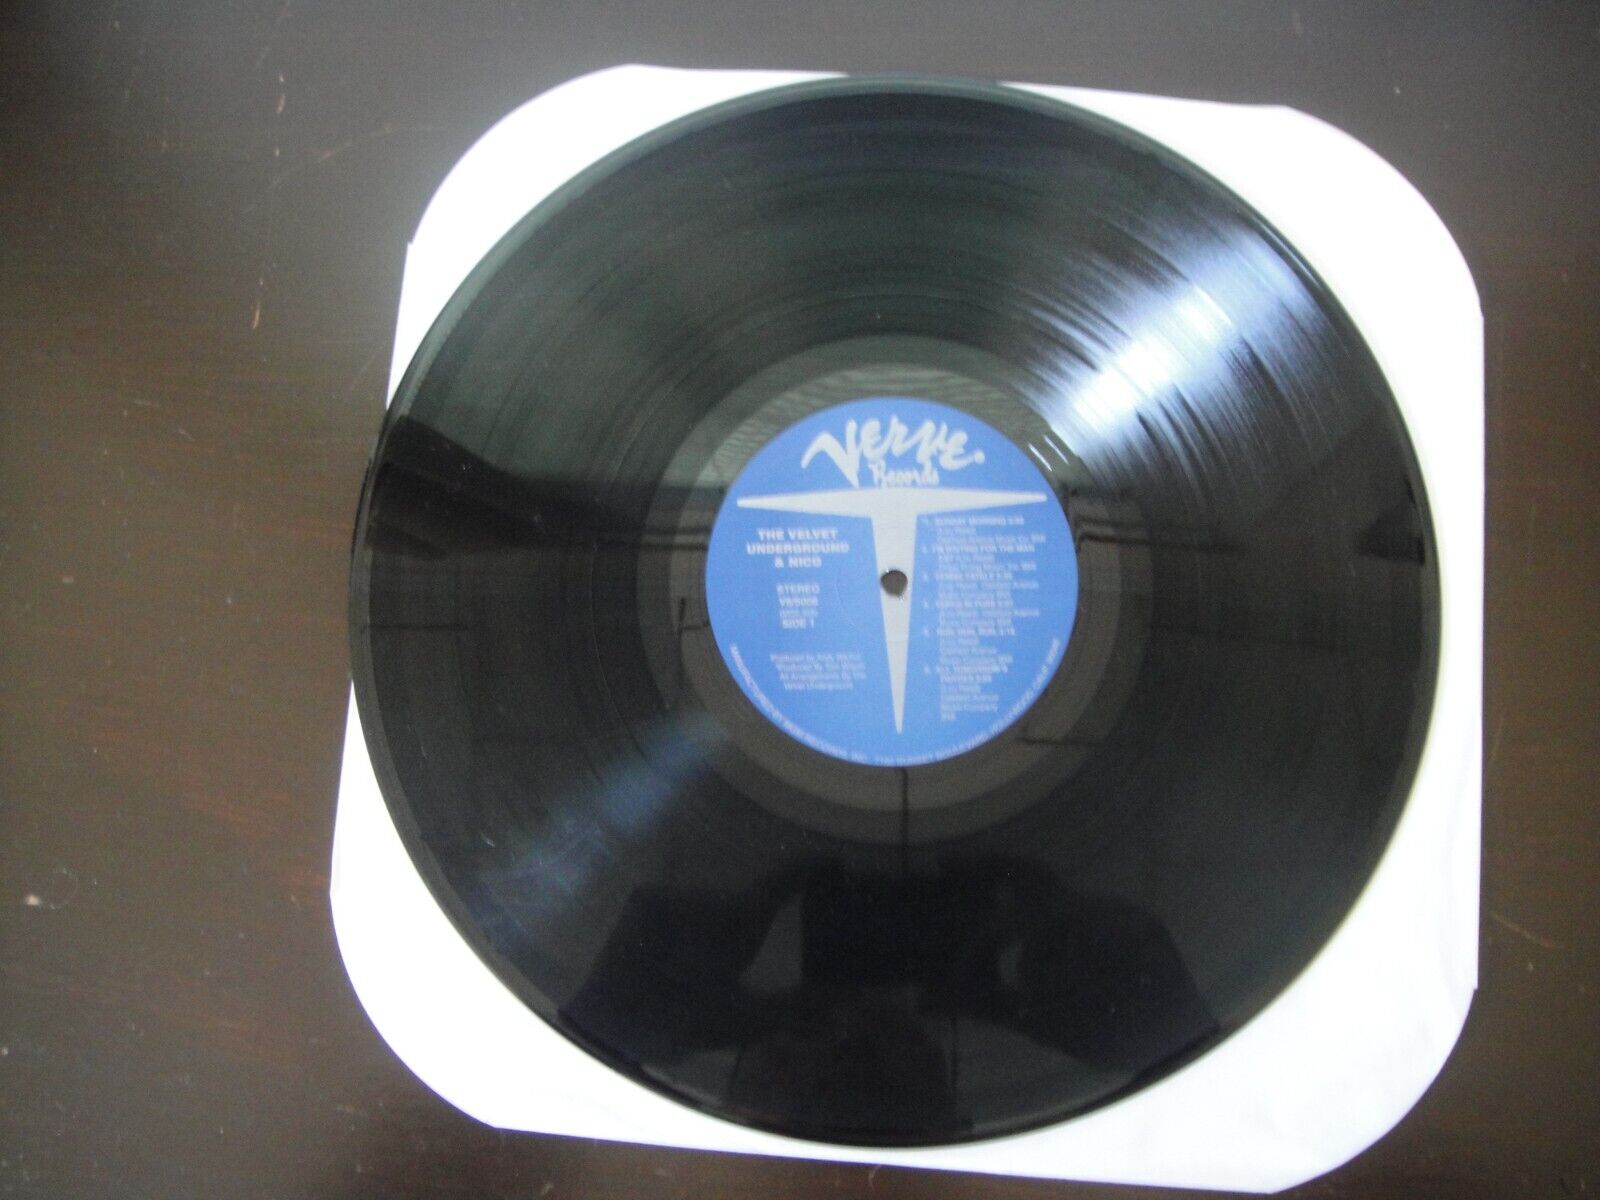 ::The Velvet Underground & Nico self-titled LP......NEAR MINT